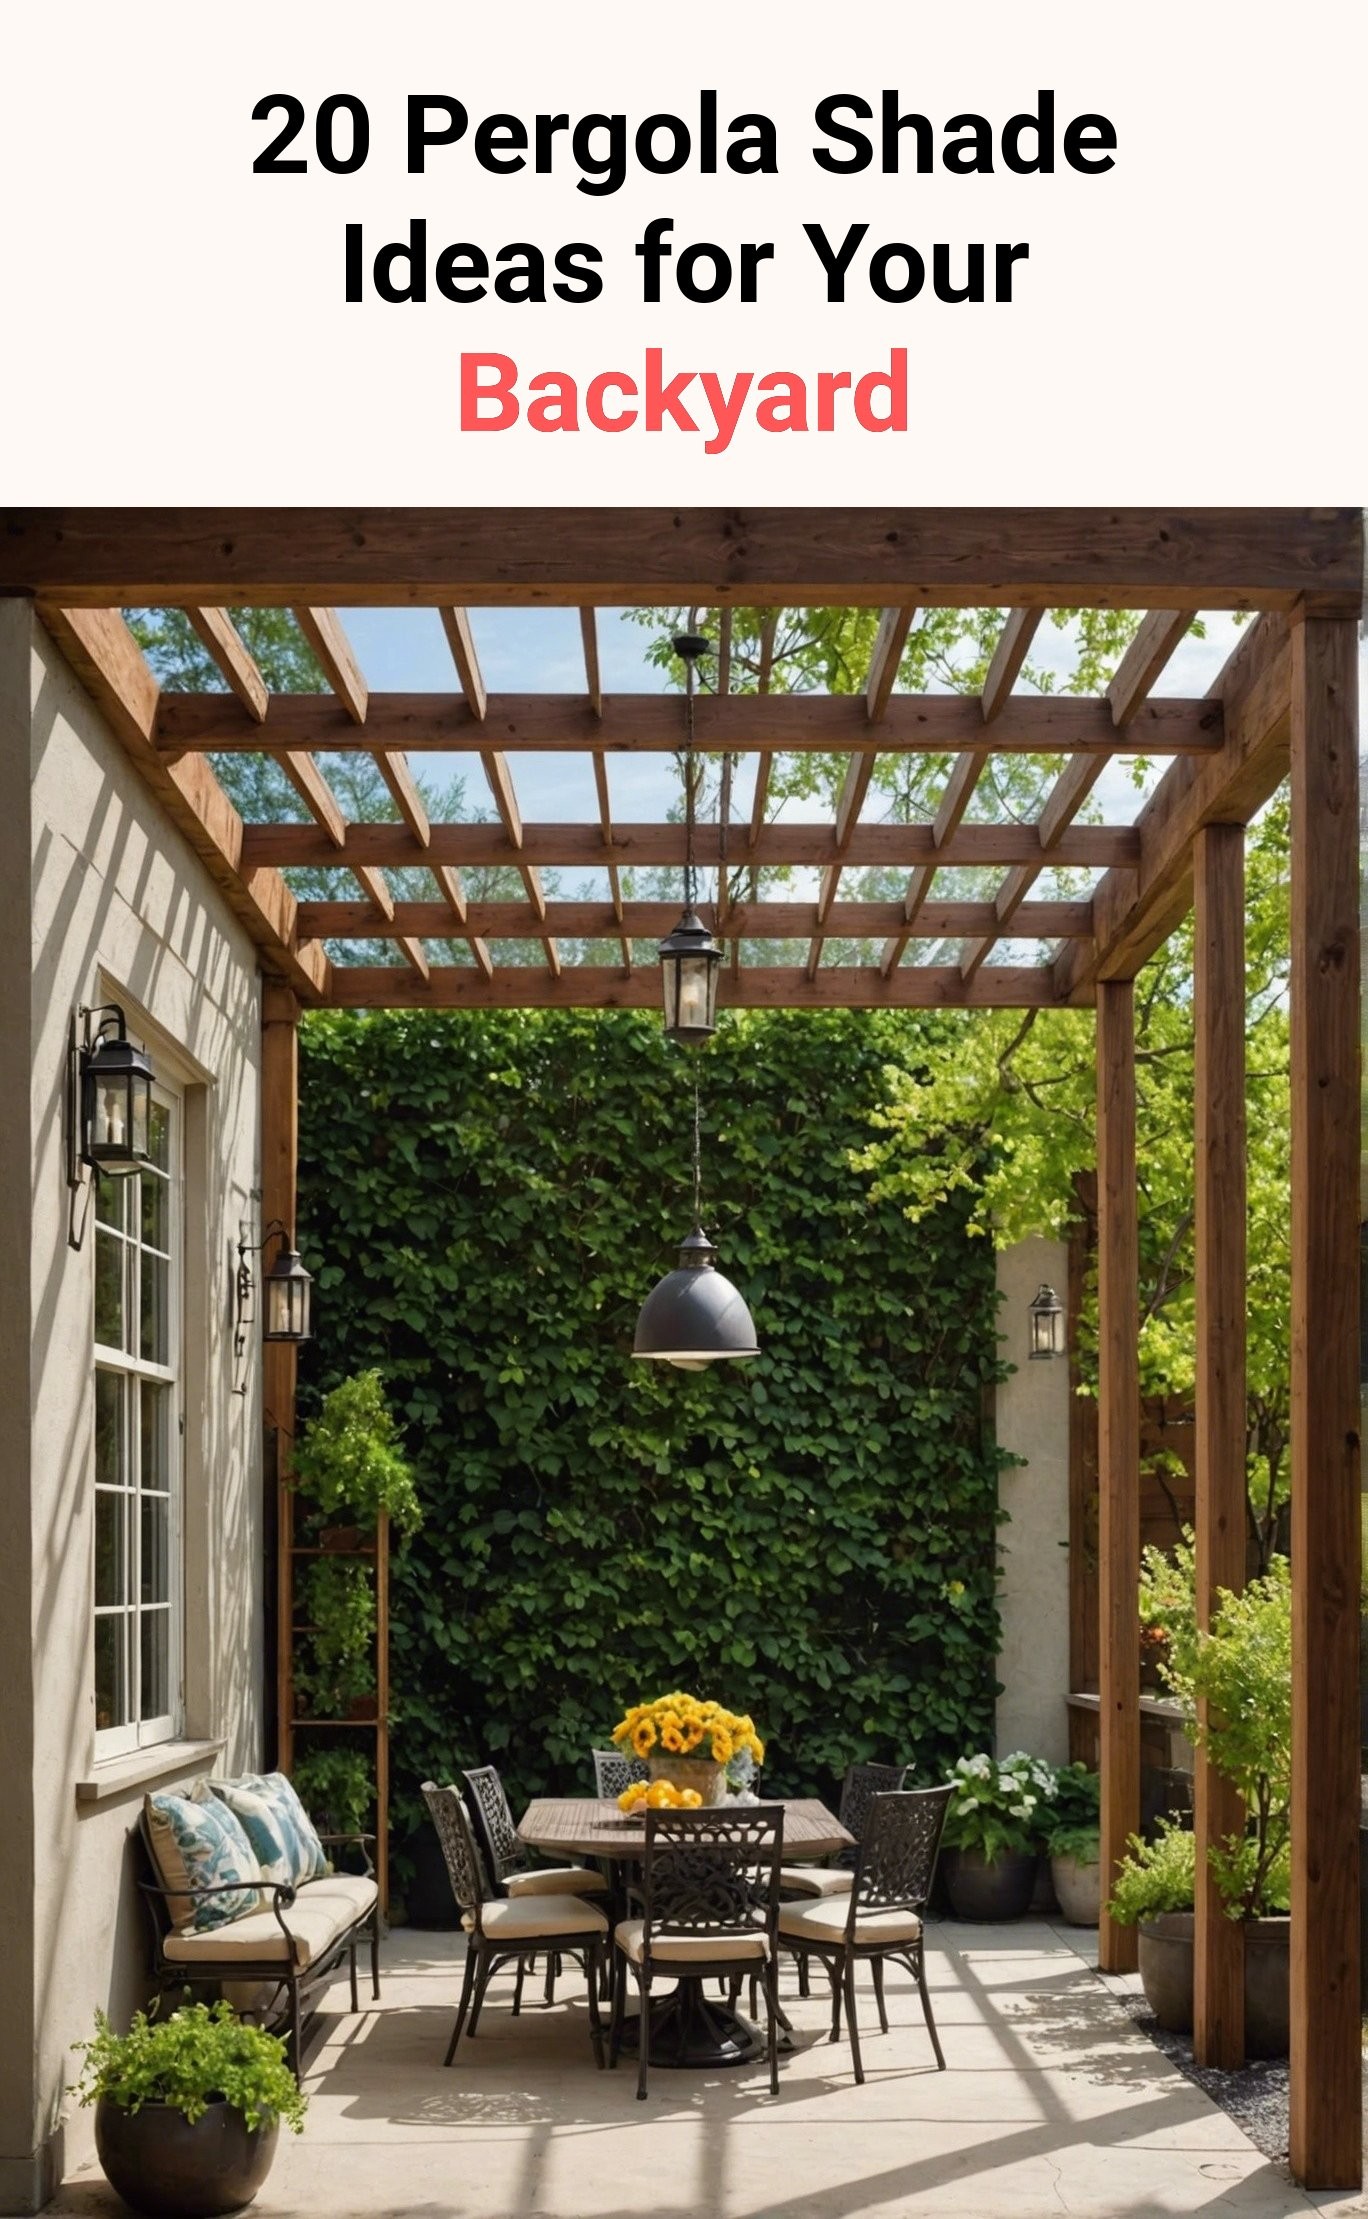 20 Pergola Shade Ideas for Your Backyard